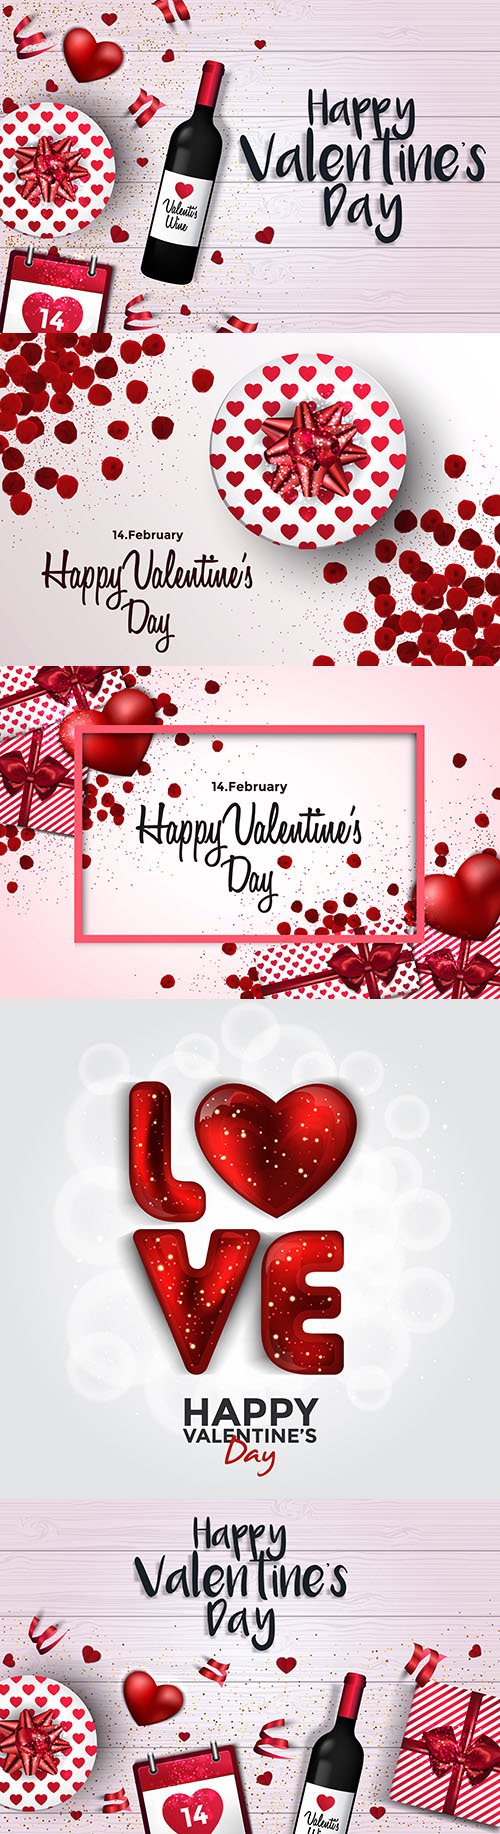 Happy Valentine's Day romantic vintage illustrations 46